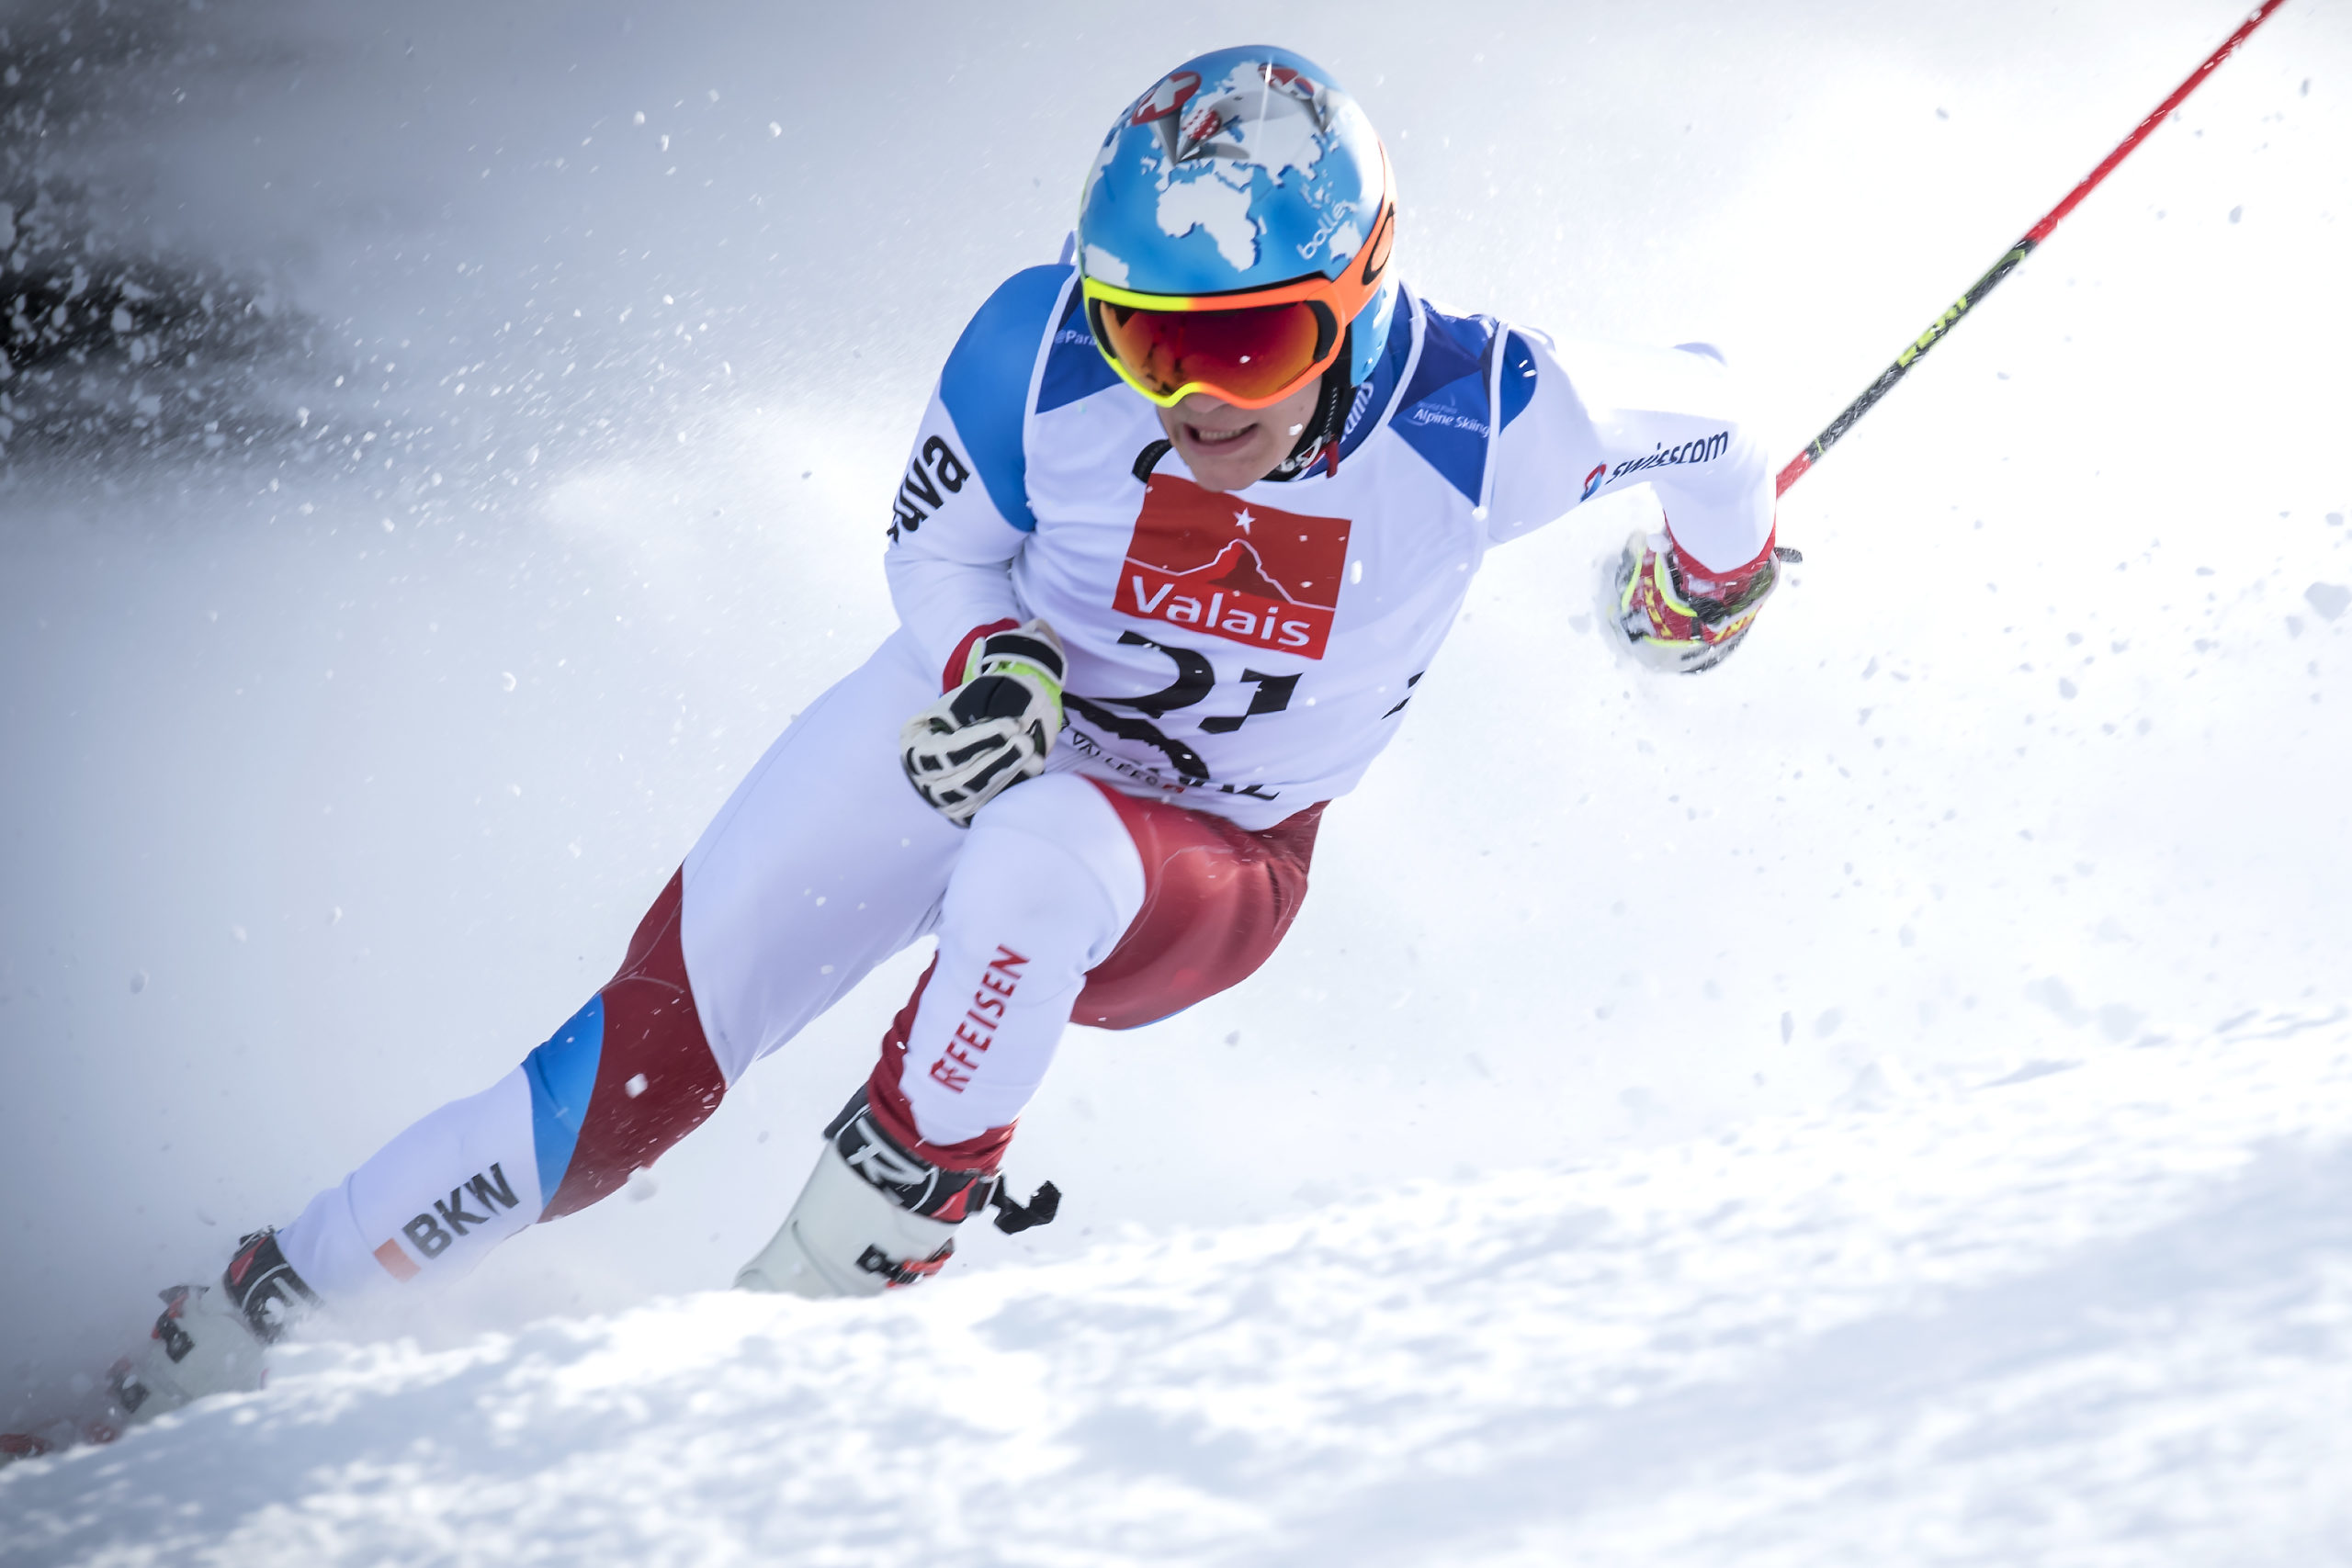 08.02.2019; Veysonnaz (Vs). World Para Alpine Skiing; Coupe du monde de Handi Ski. Slalom Geant; Theo GMUR (SUI)photo Jean-Guy Python